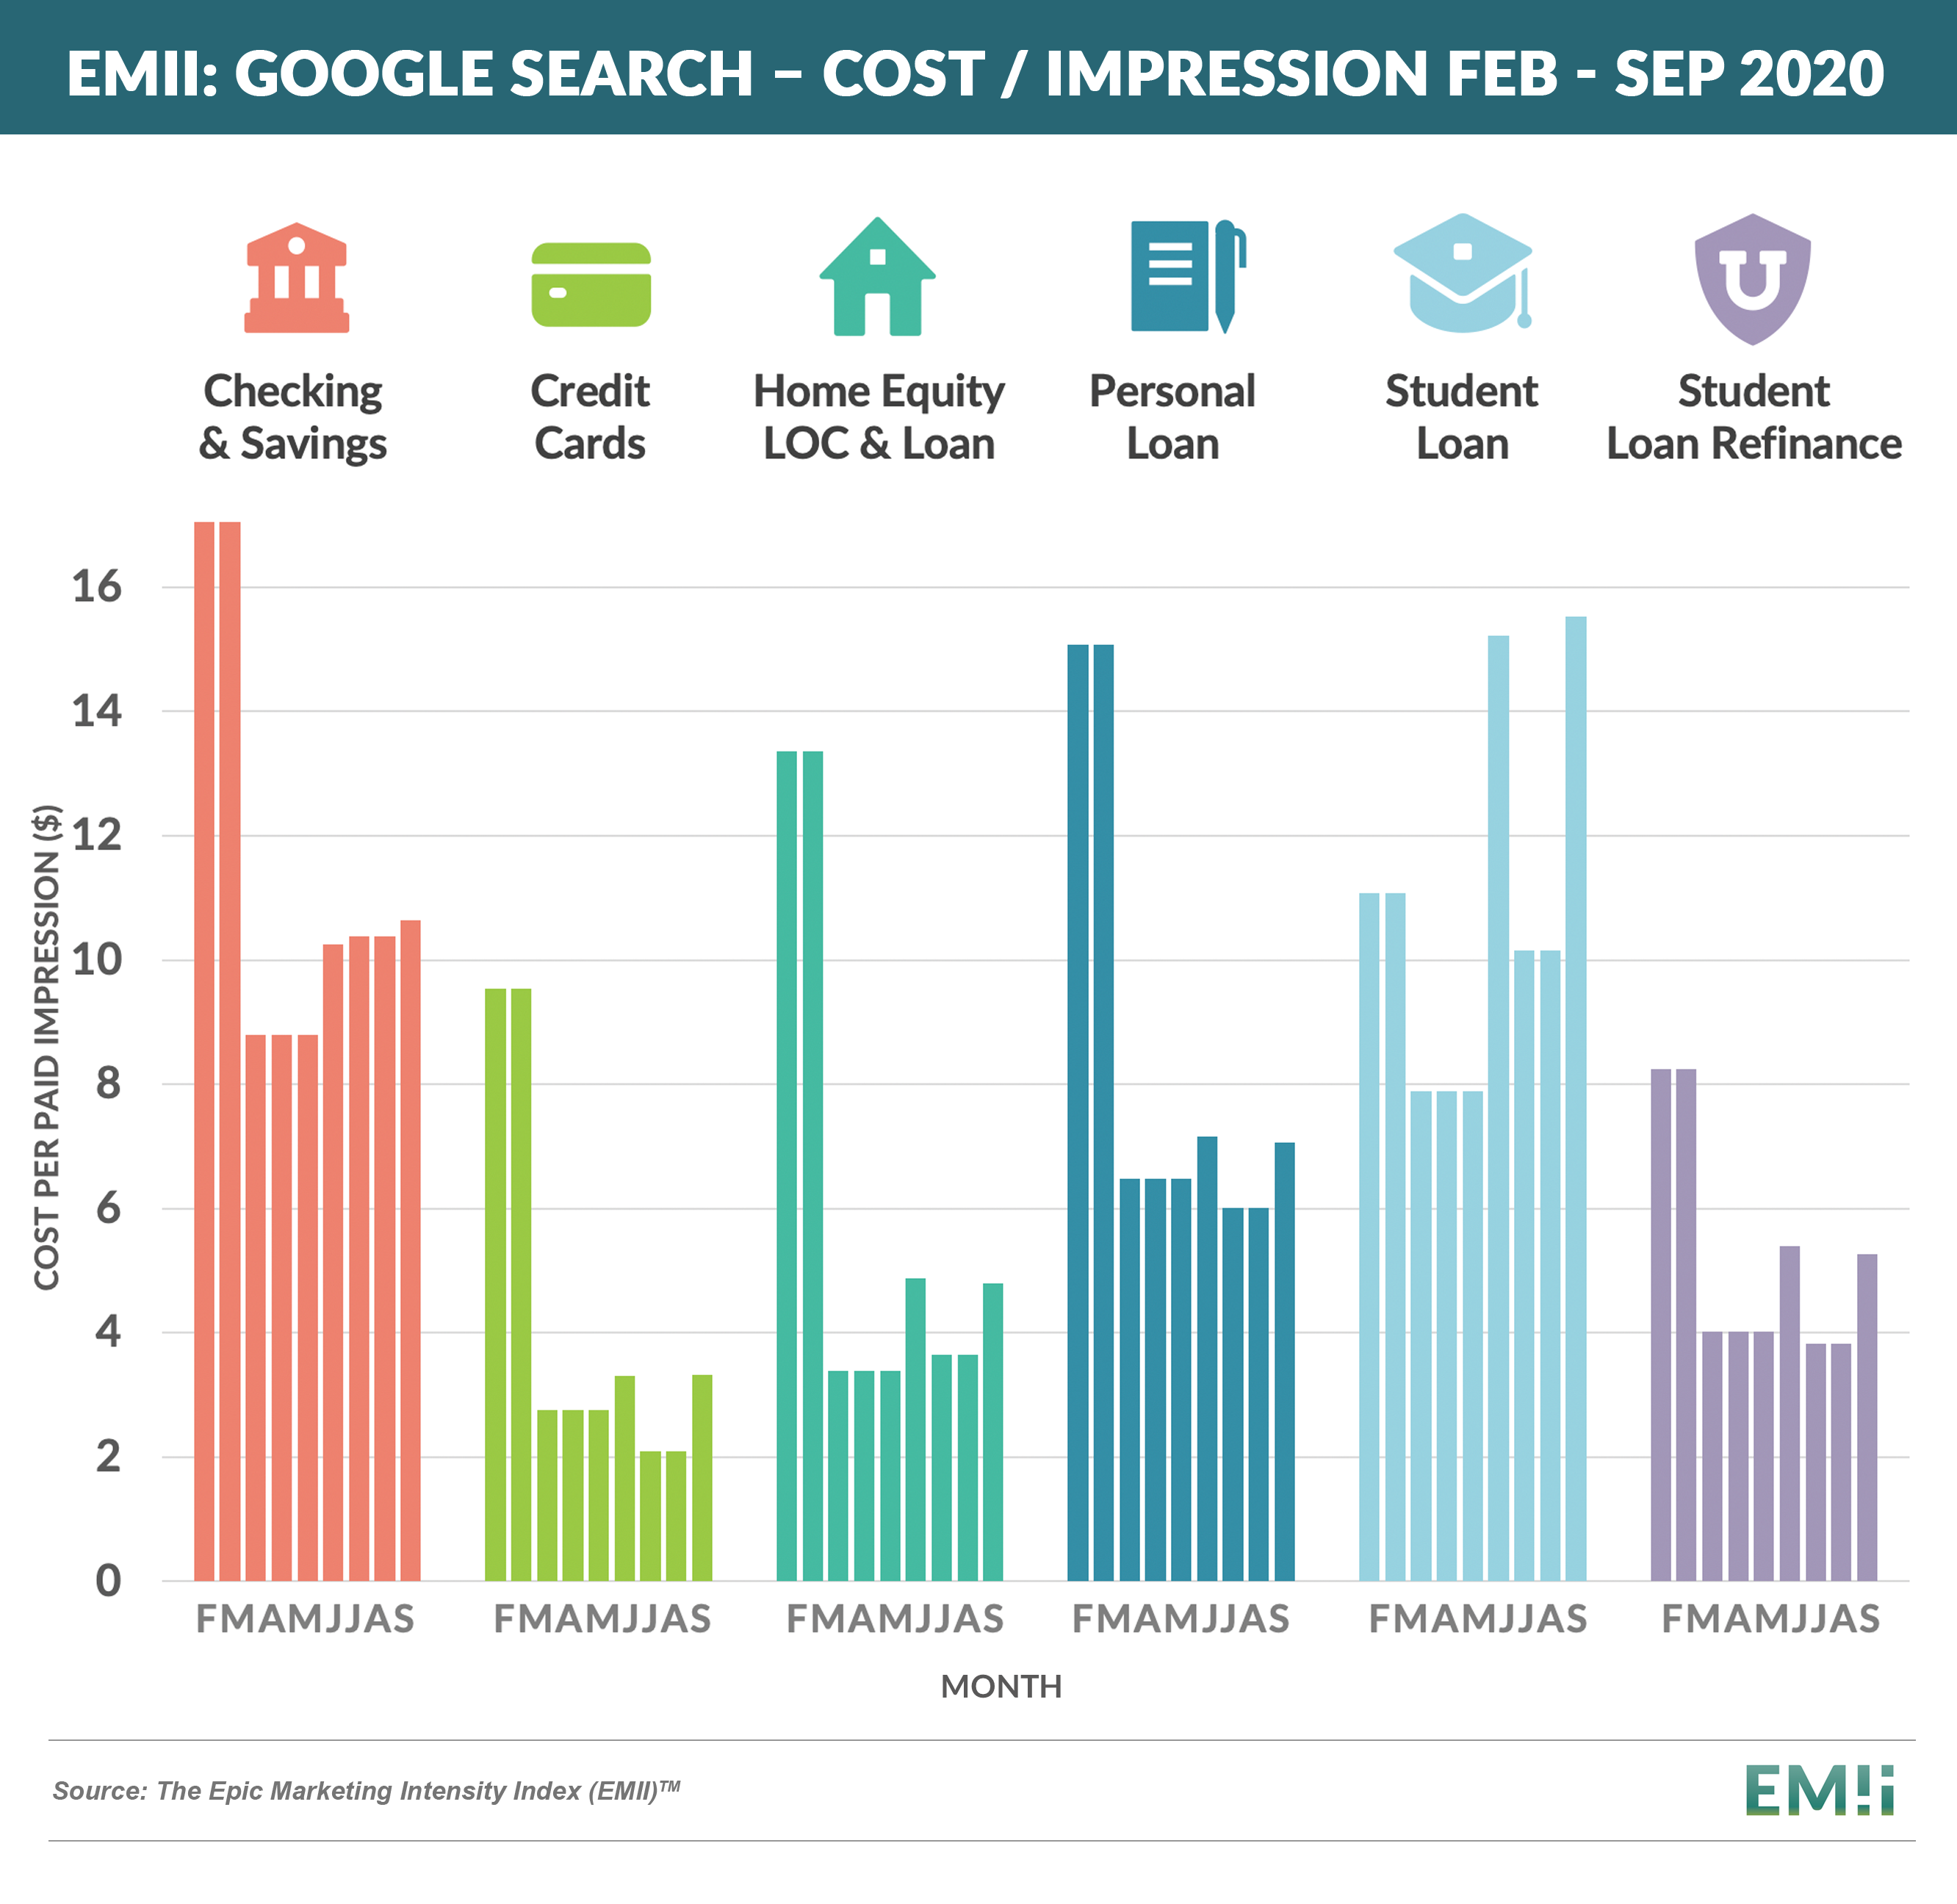 EMII - Google Search - Cost per impression FEB-SEP 2020